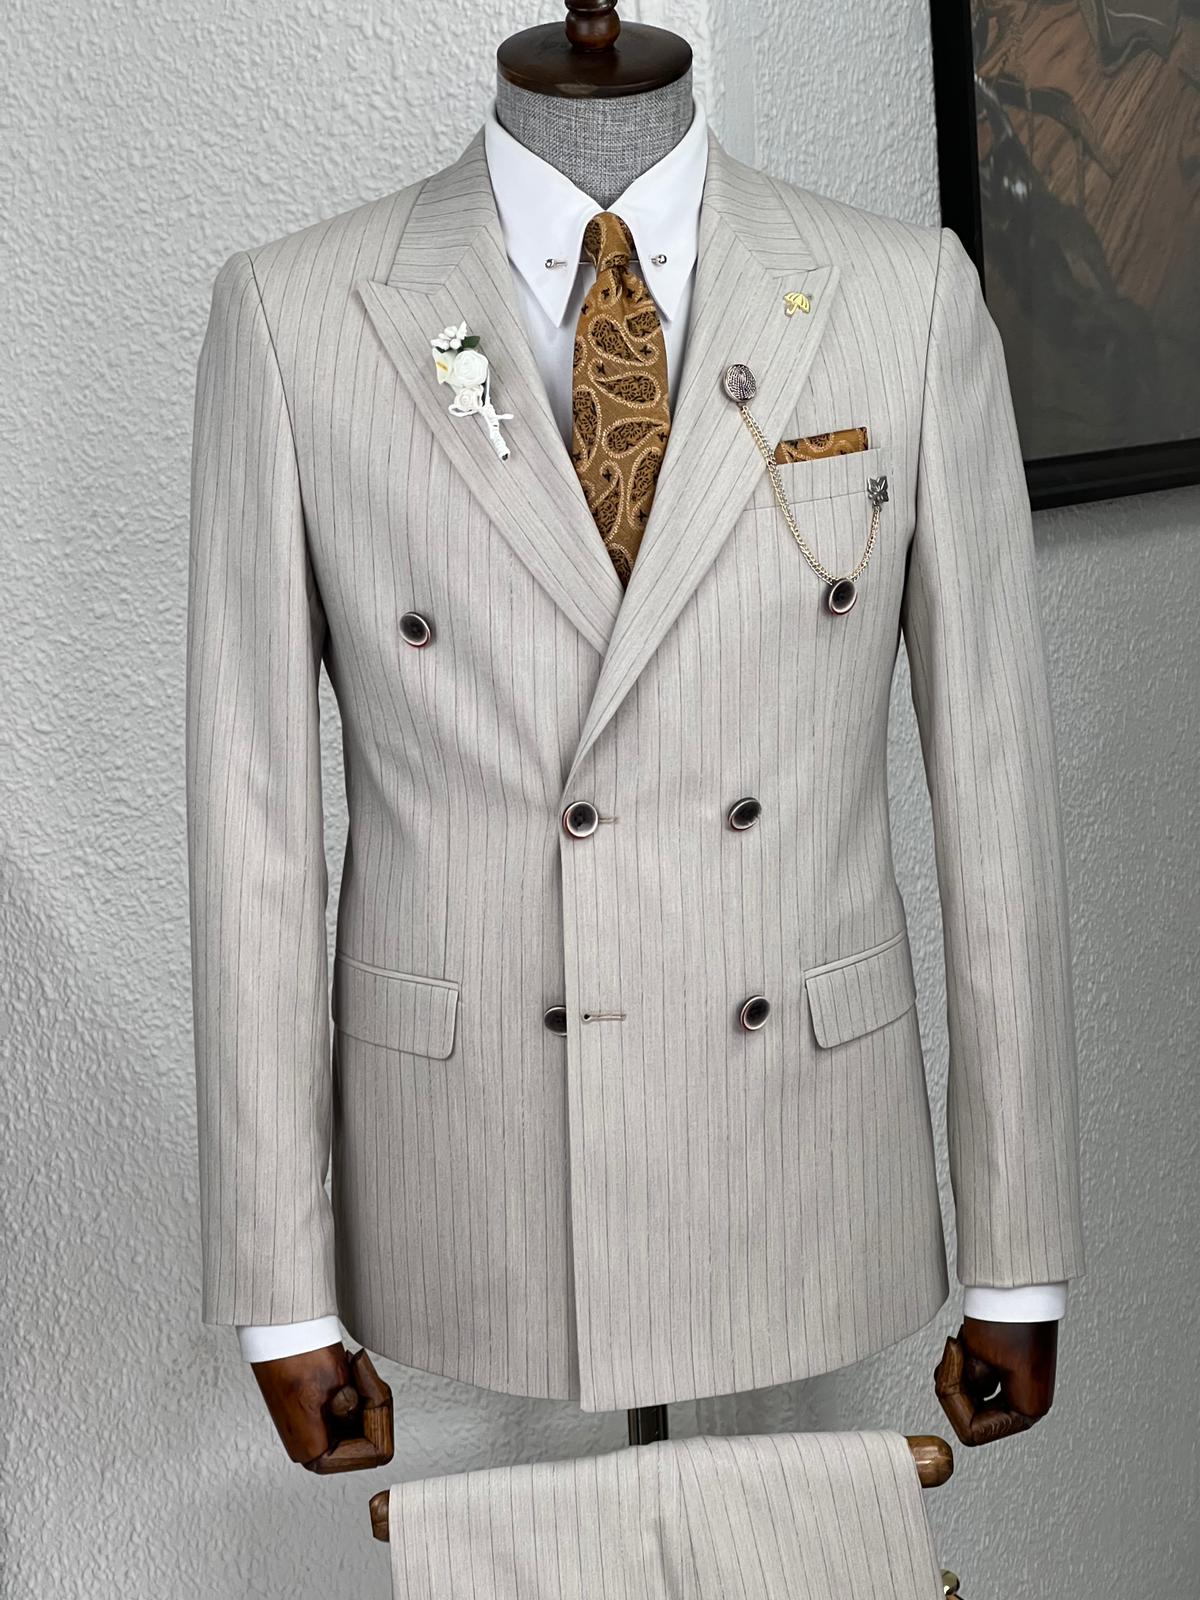 Veneta Slim Fit High Quality Striped Double Breasted Beige Woolen Suit